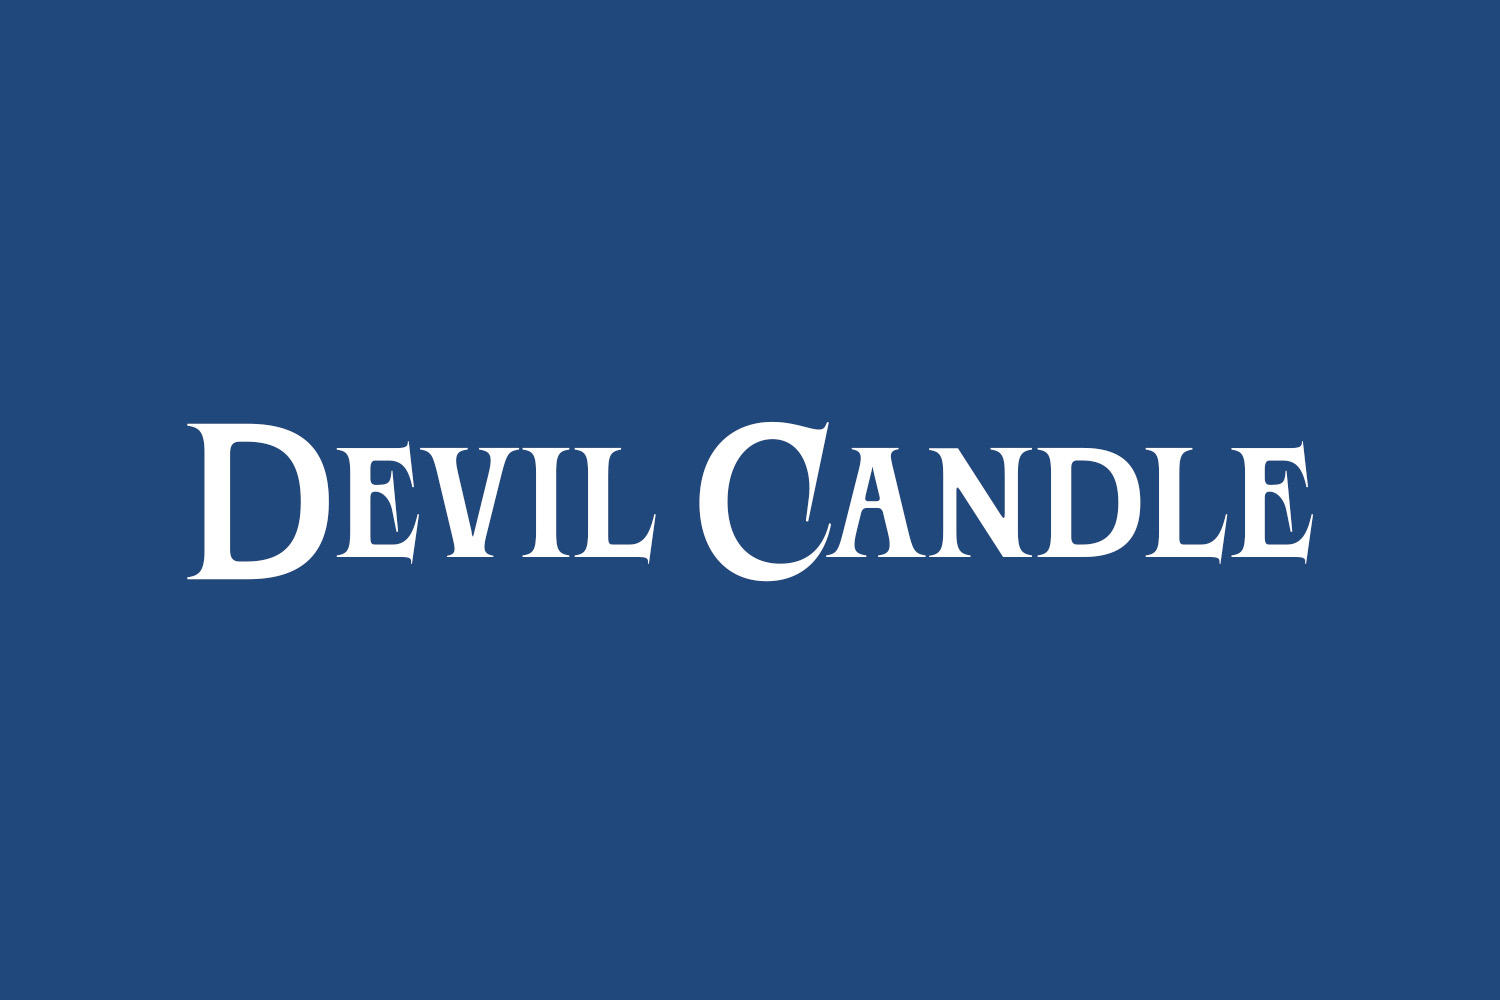 Devil Candle Free Font